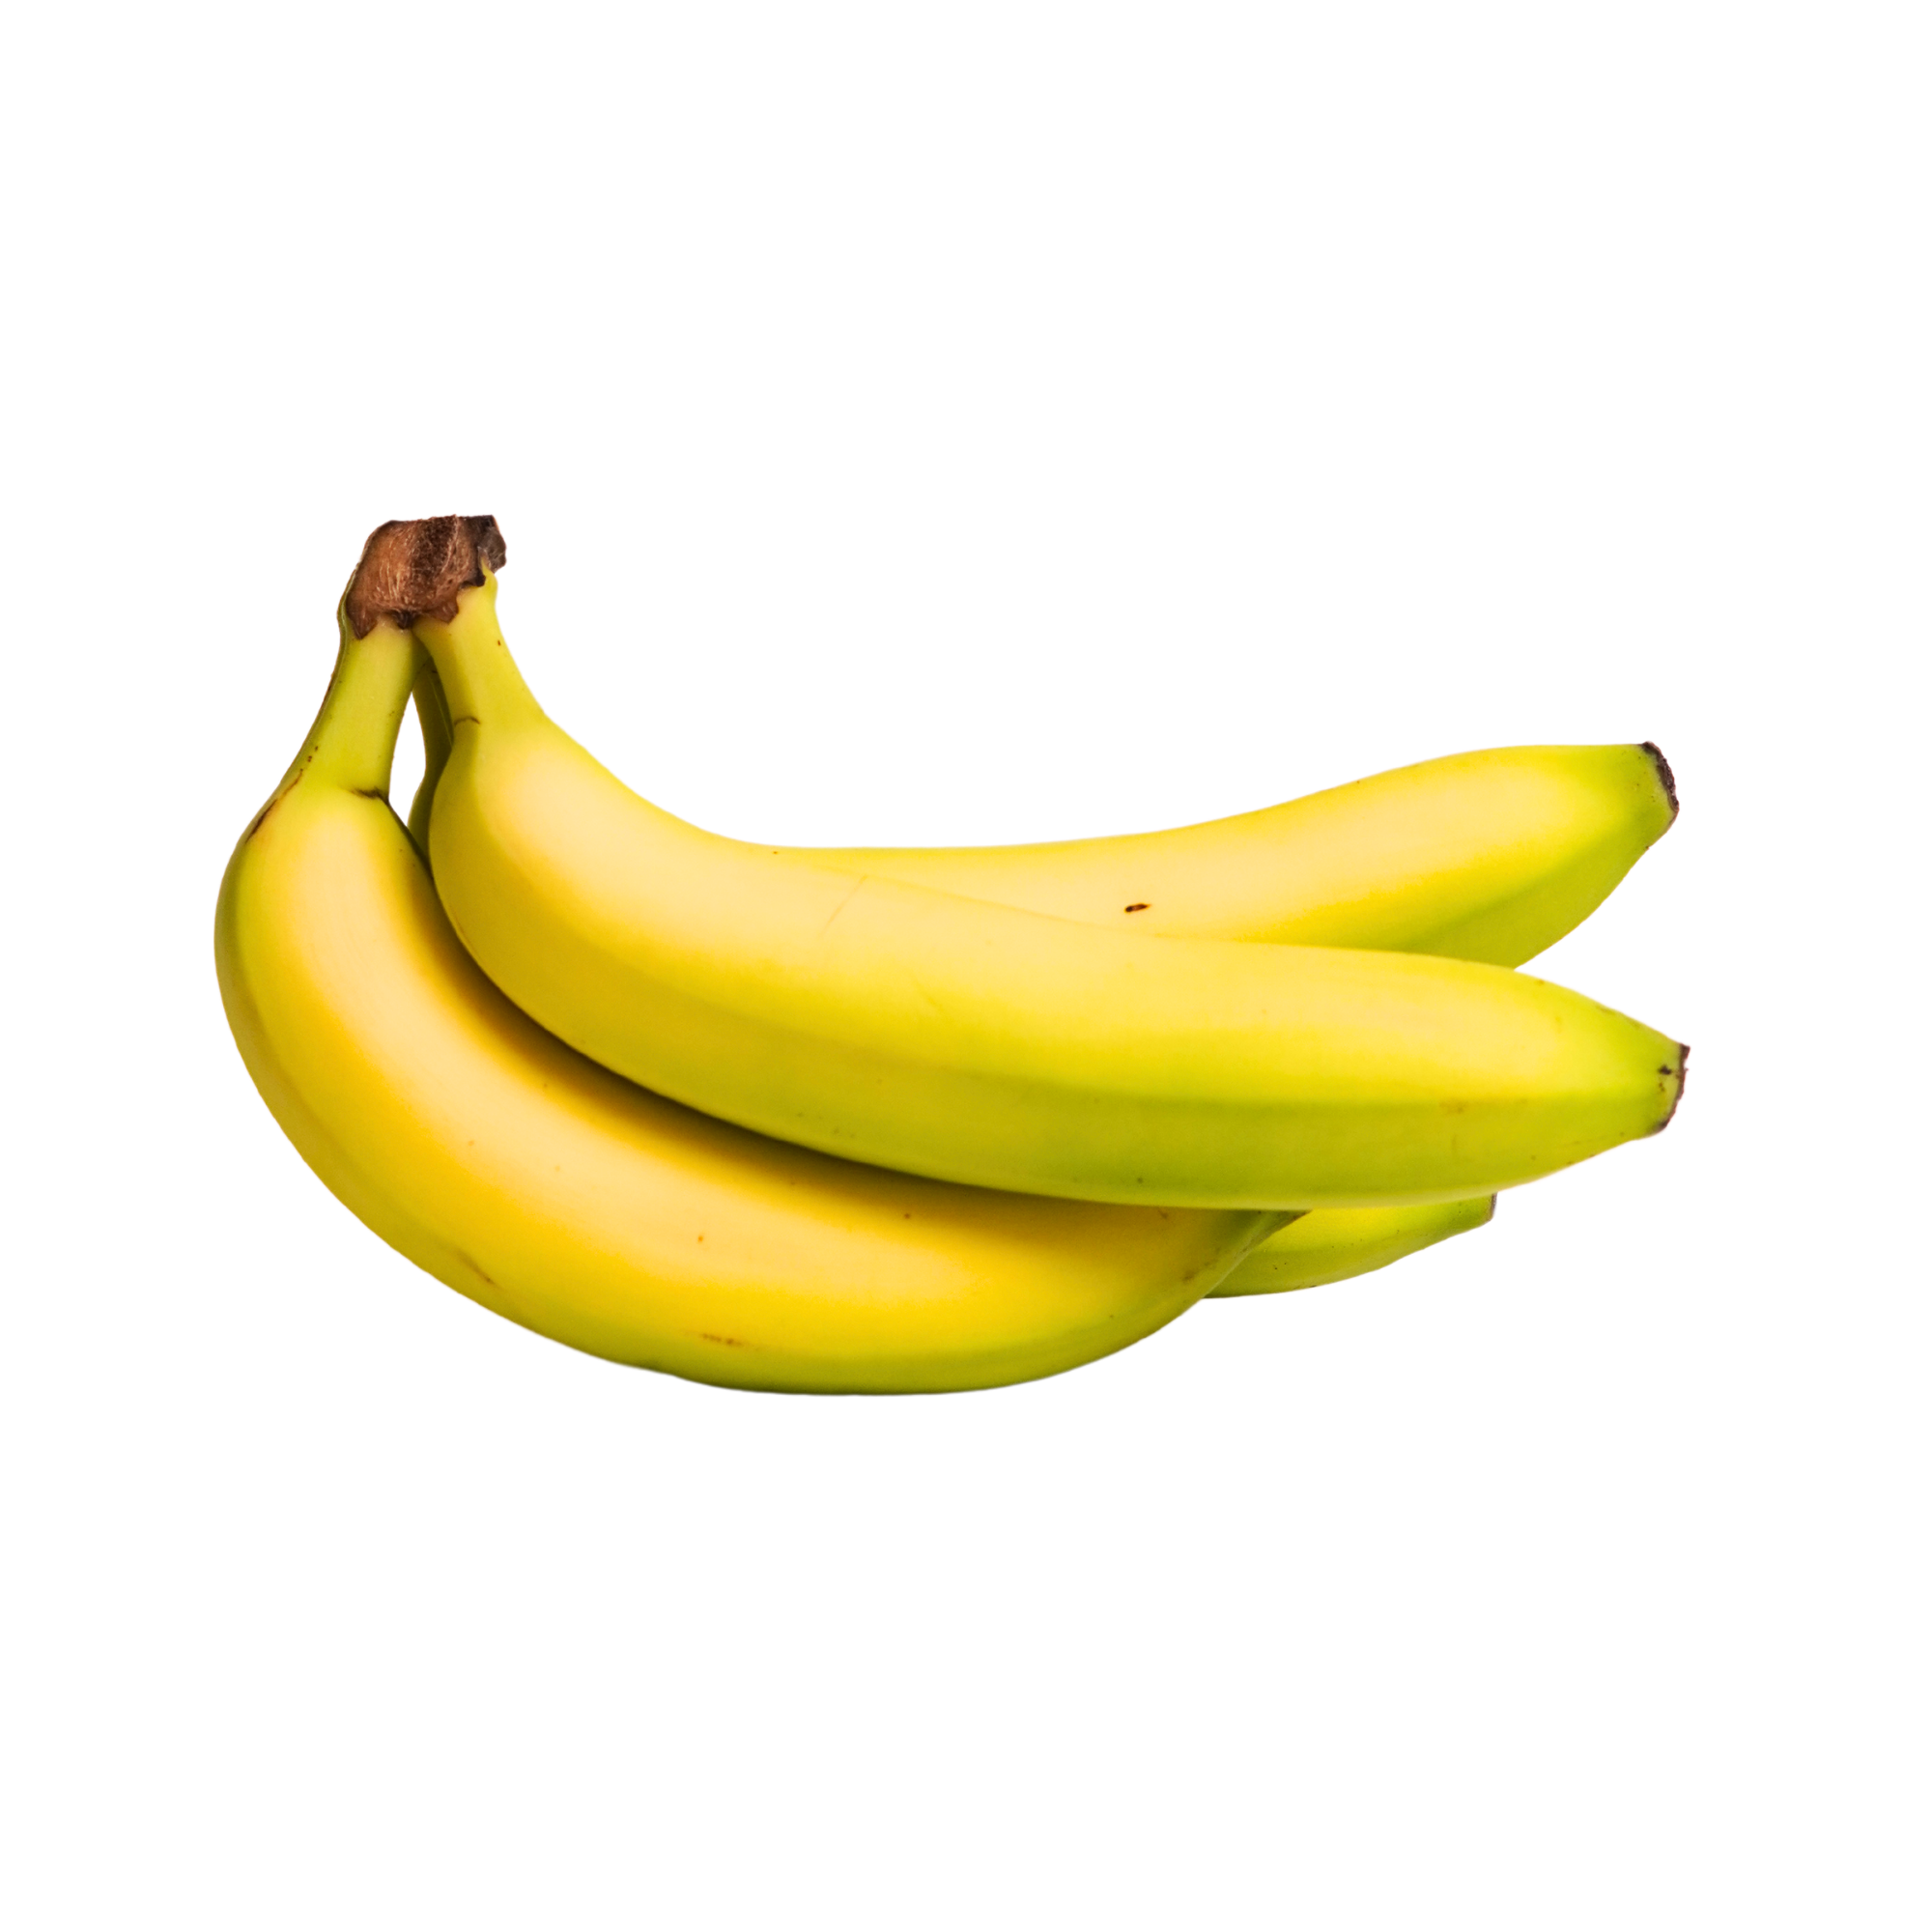 Banana Ripe 1 Count - 0